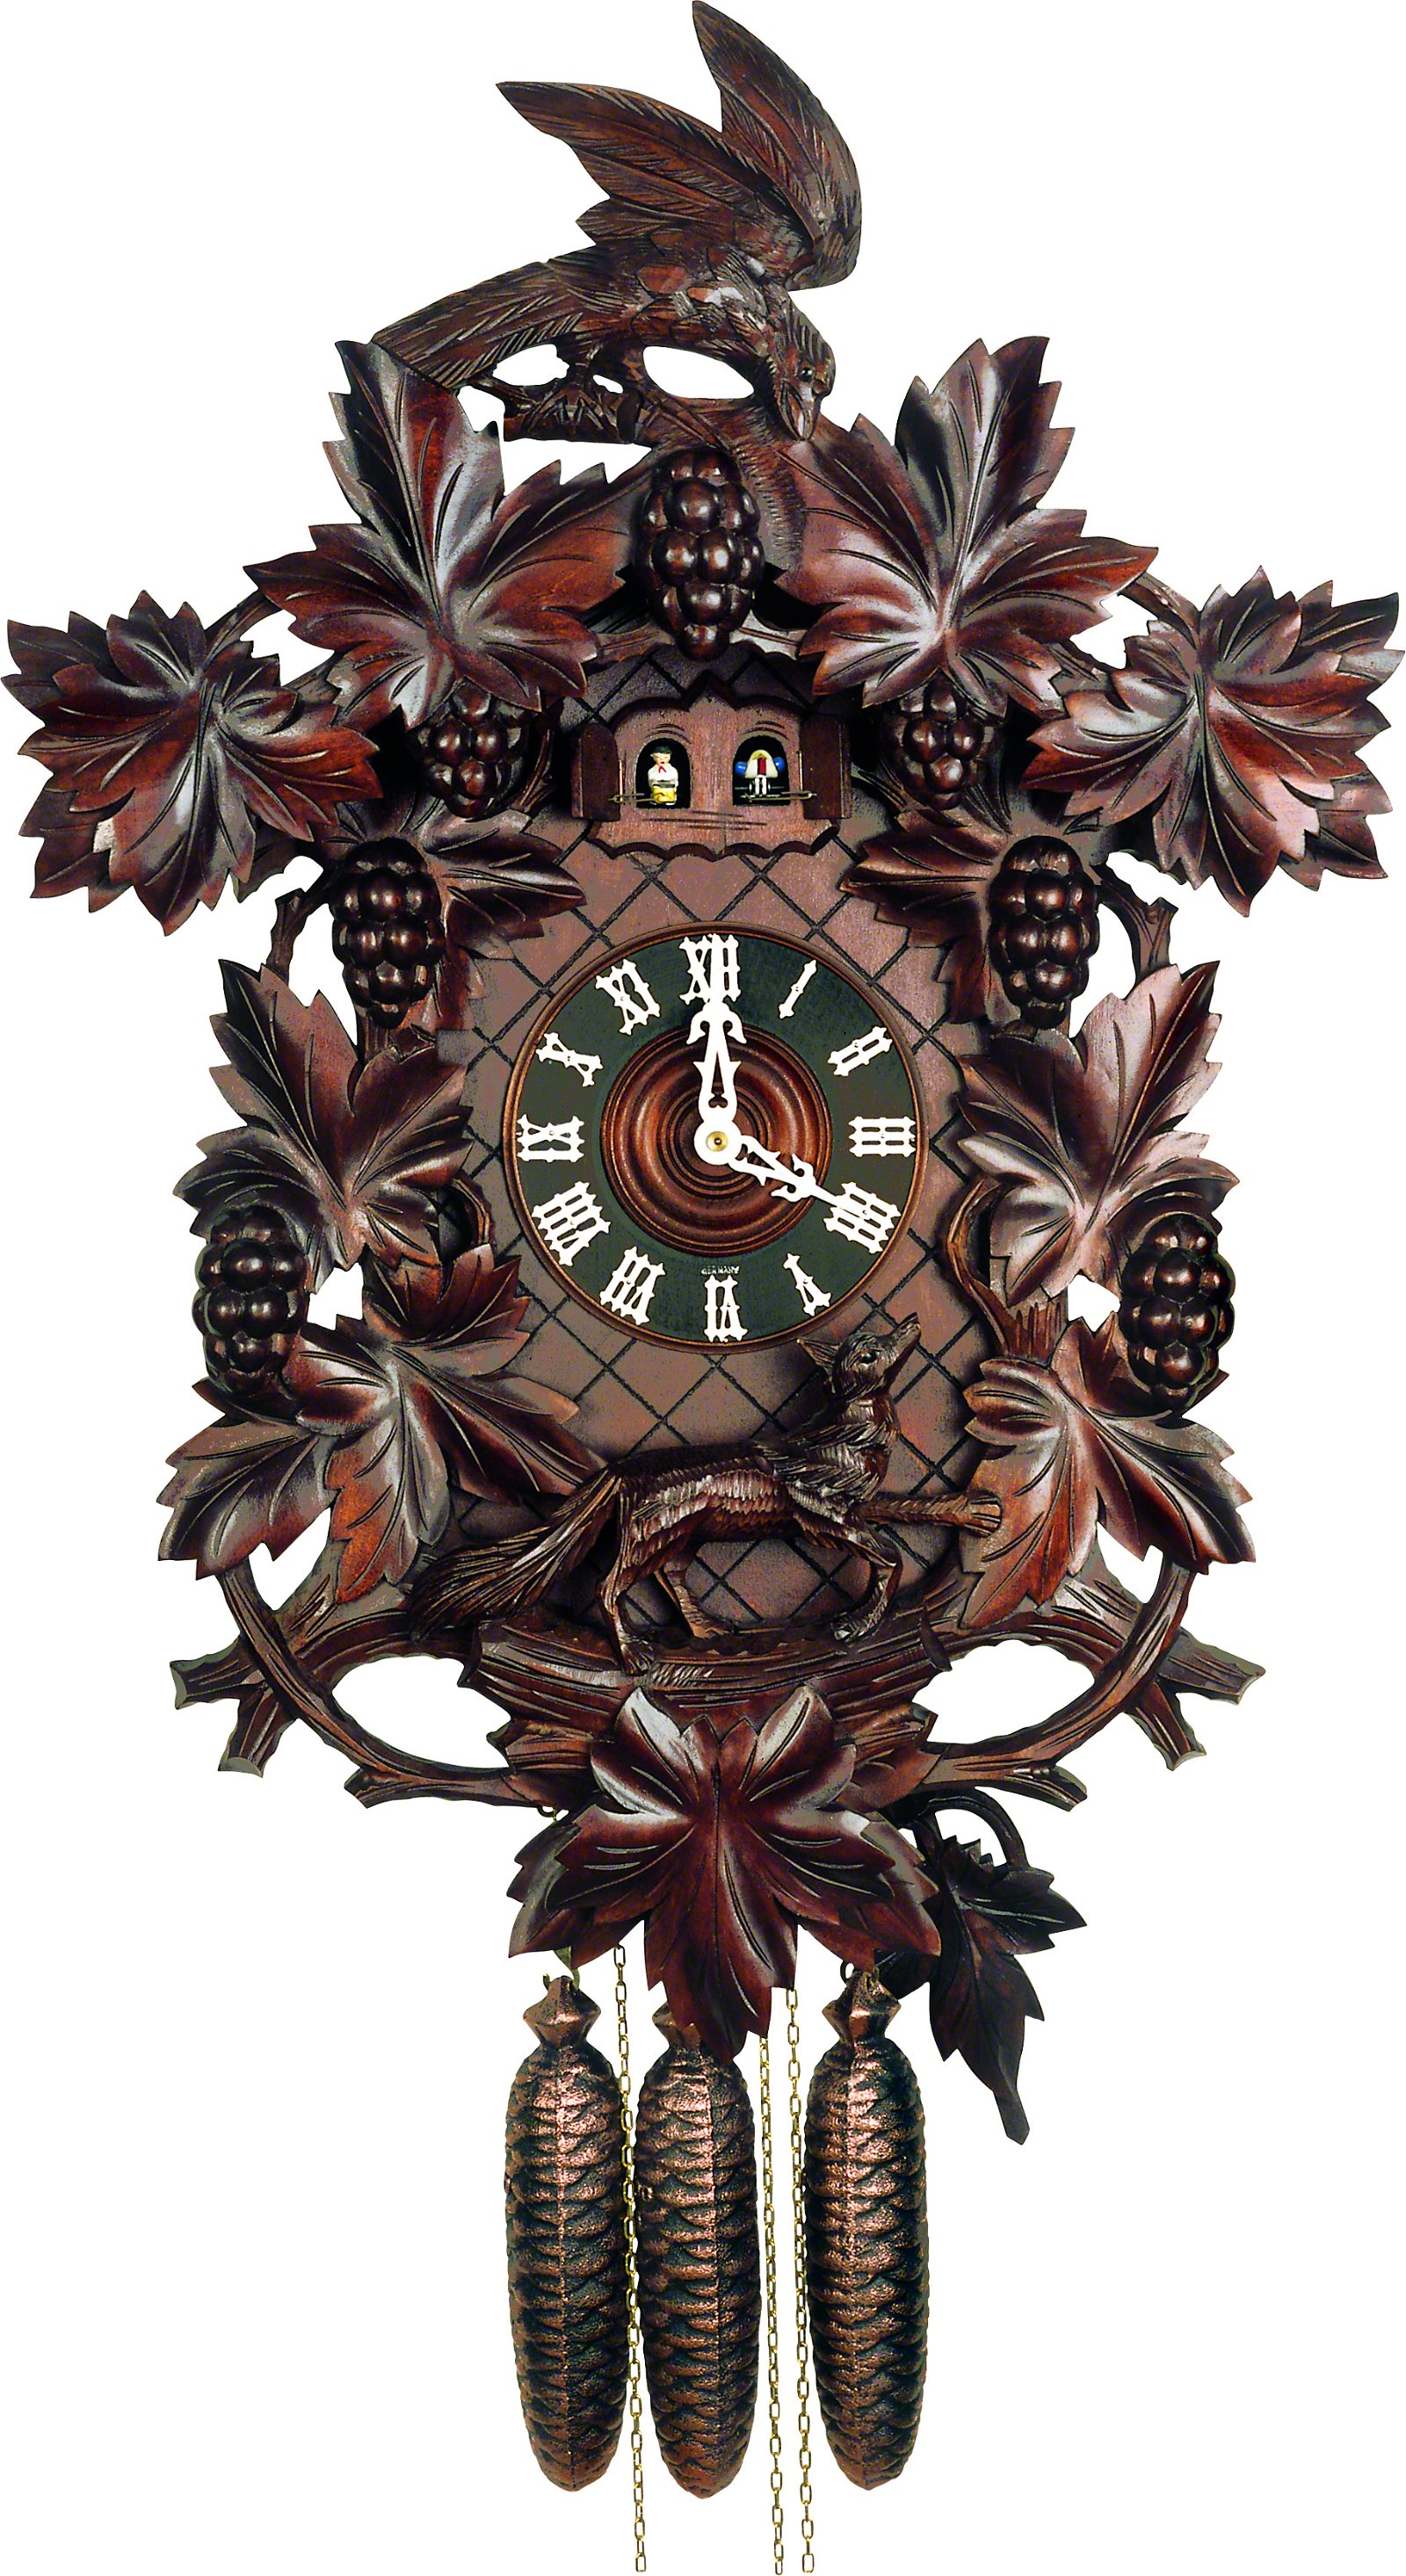 Hubert Herr KW 60 1 day cuckoo clock movement with a  std 24 cm pendulum drop 